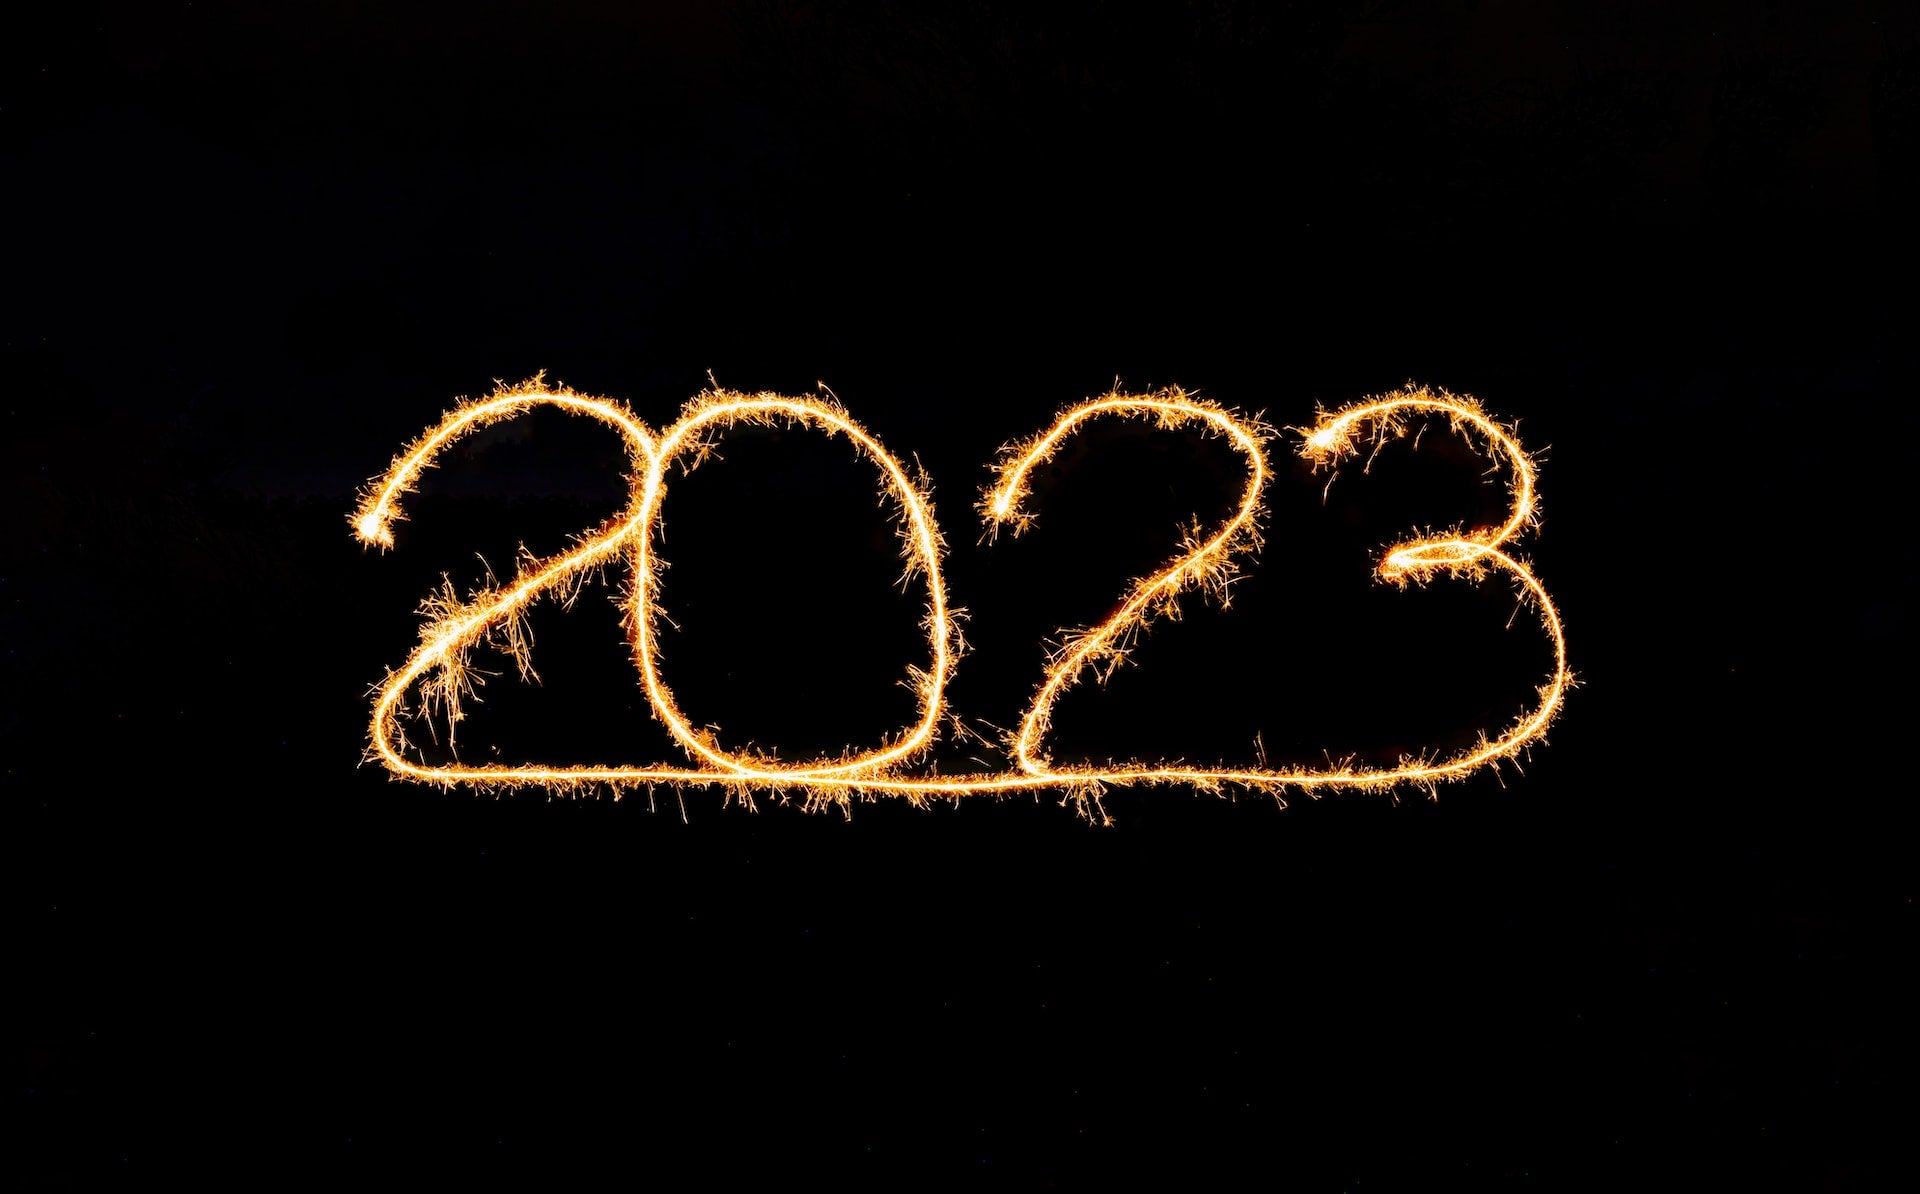 2023 written by a sparkler, unsplash image